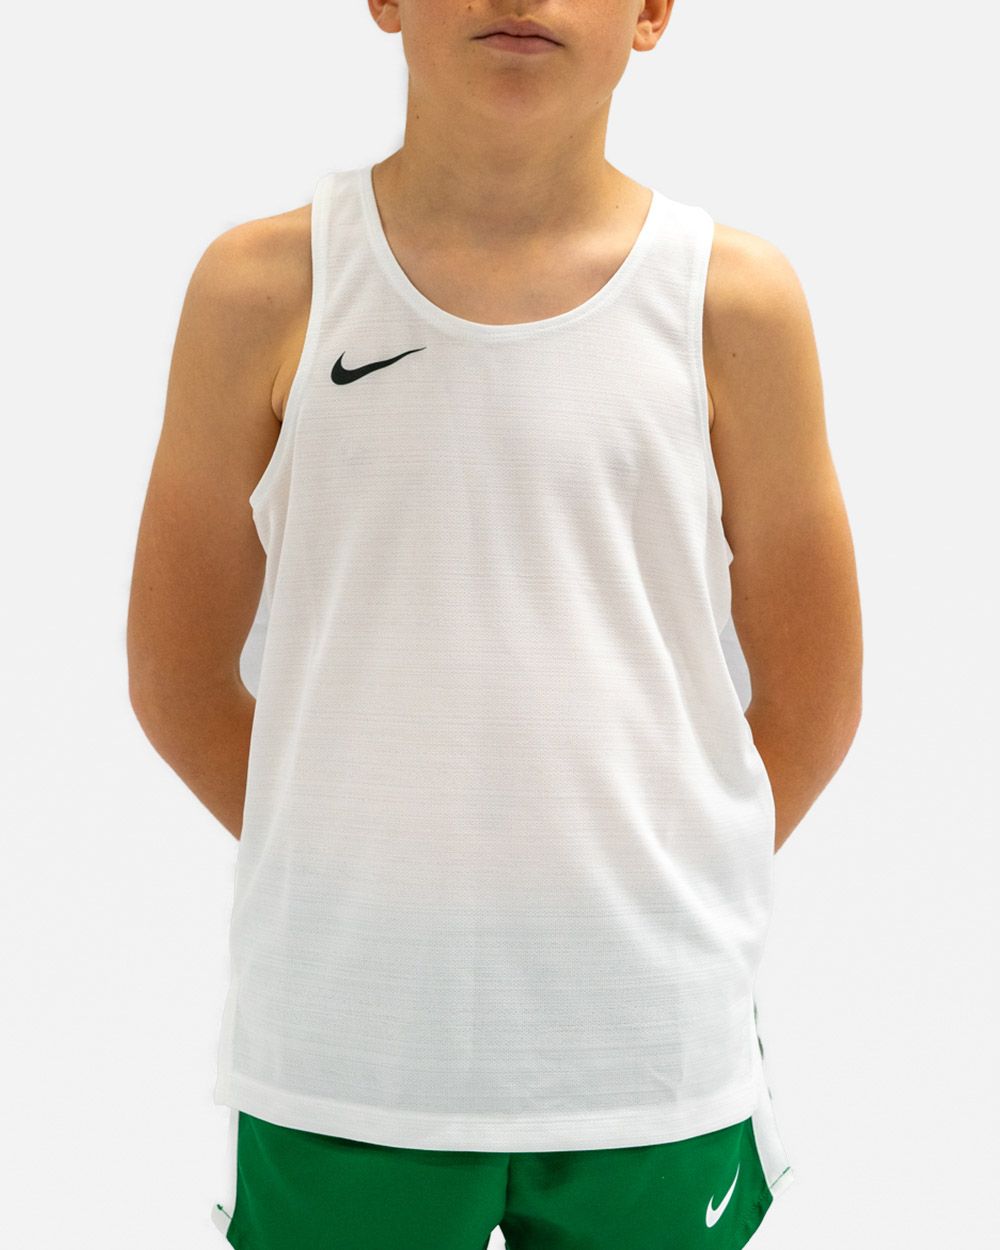 Nike Training - Dry Athlete - Débardeur - Blanc